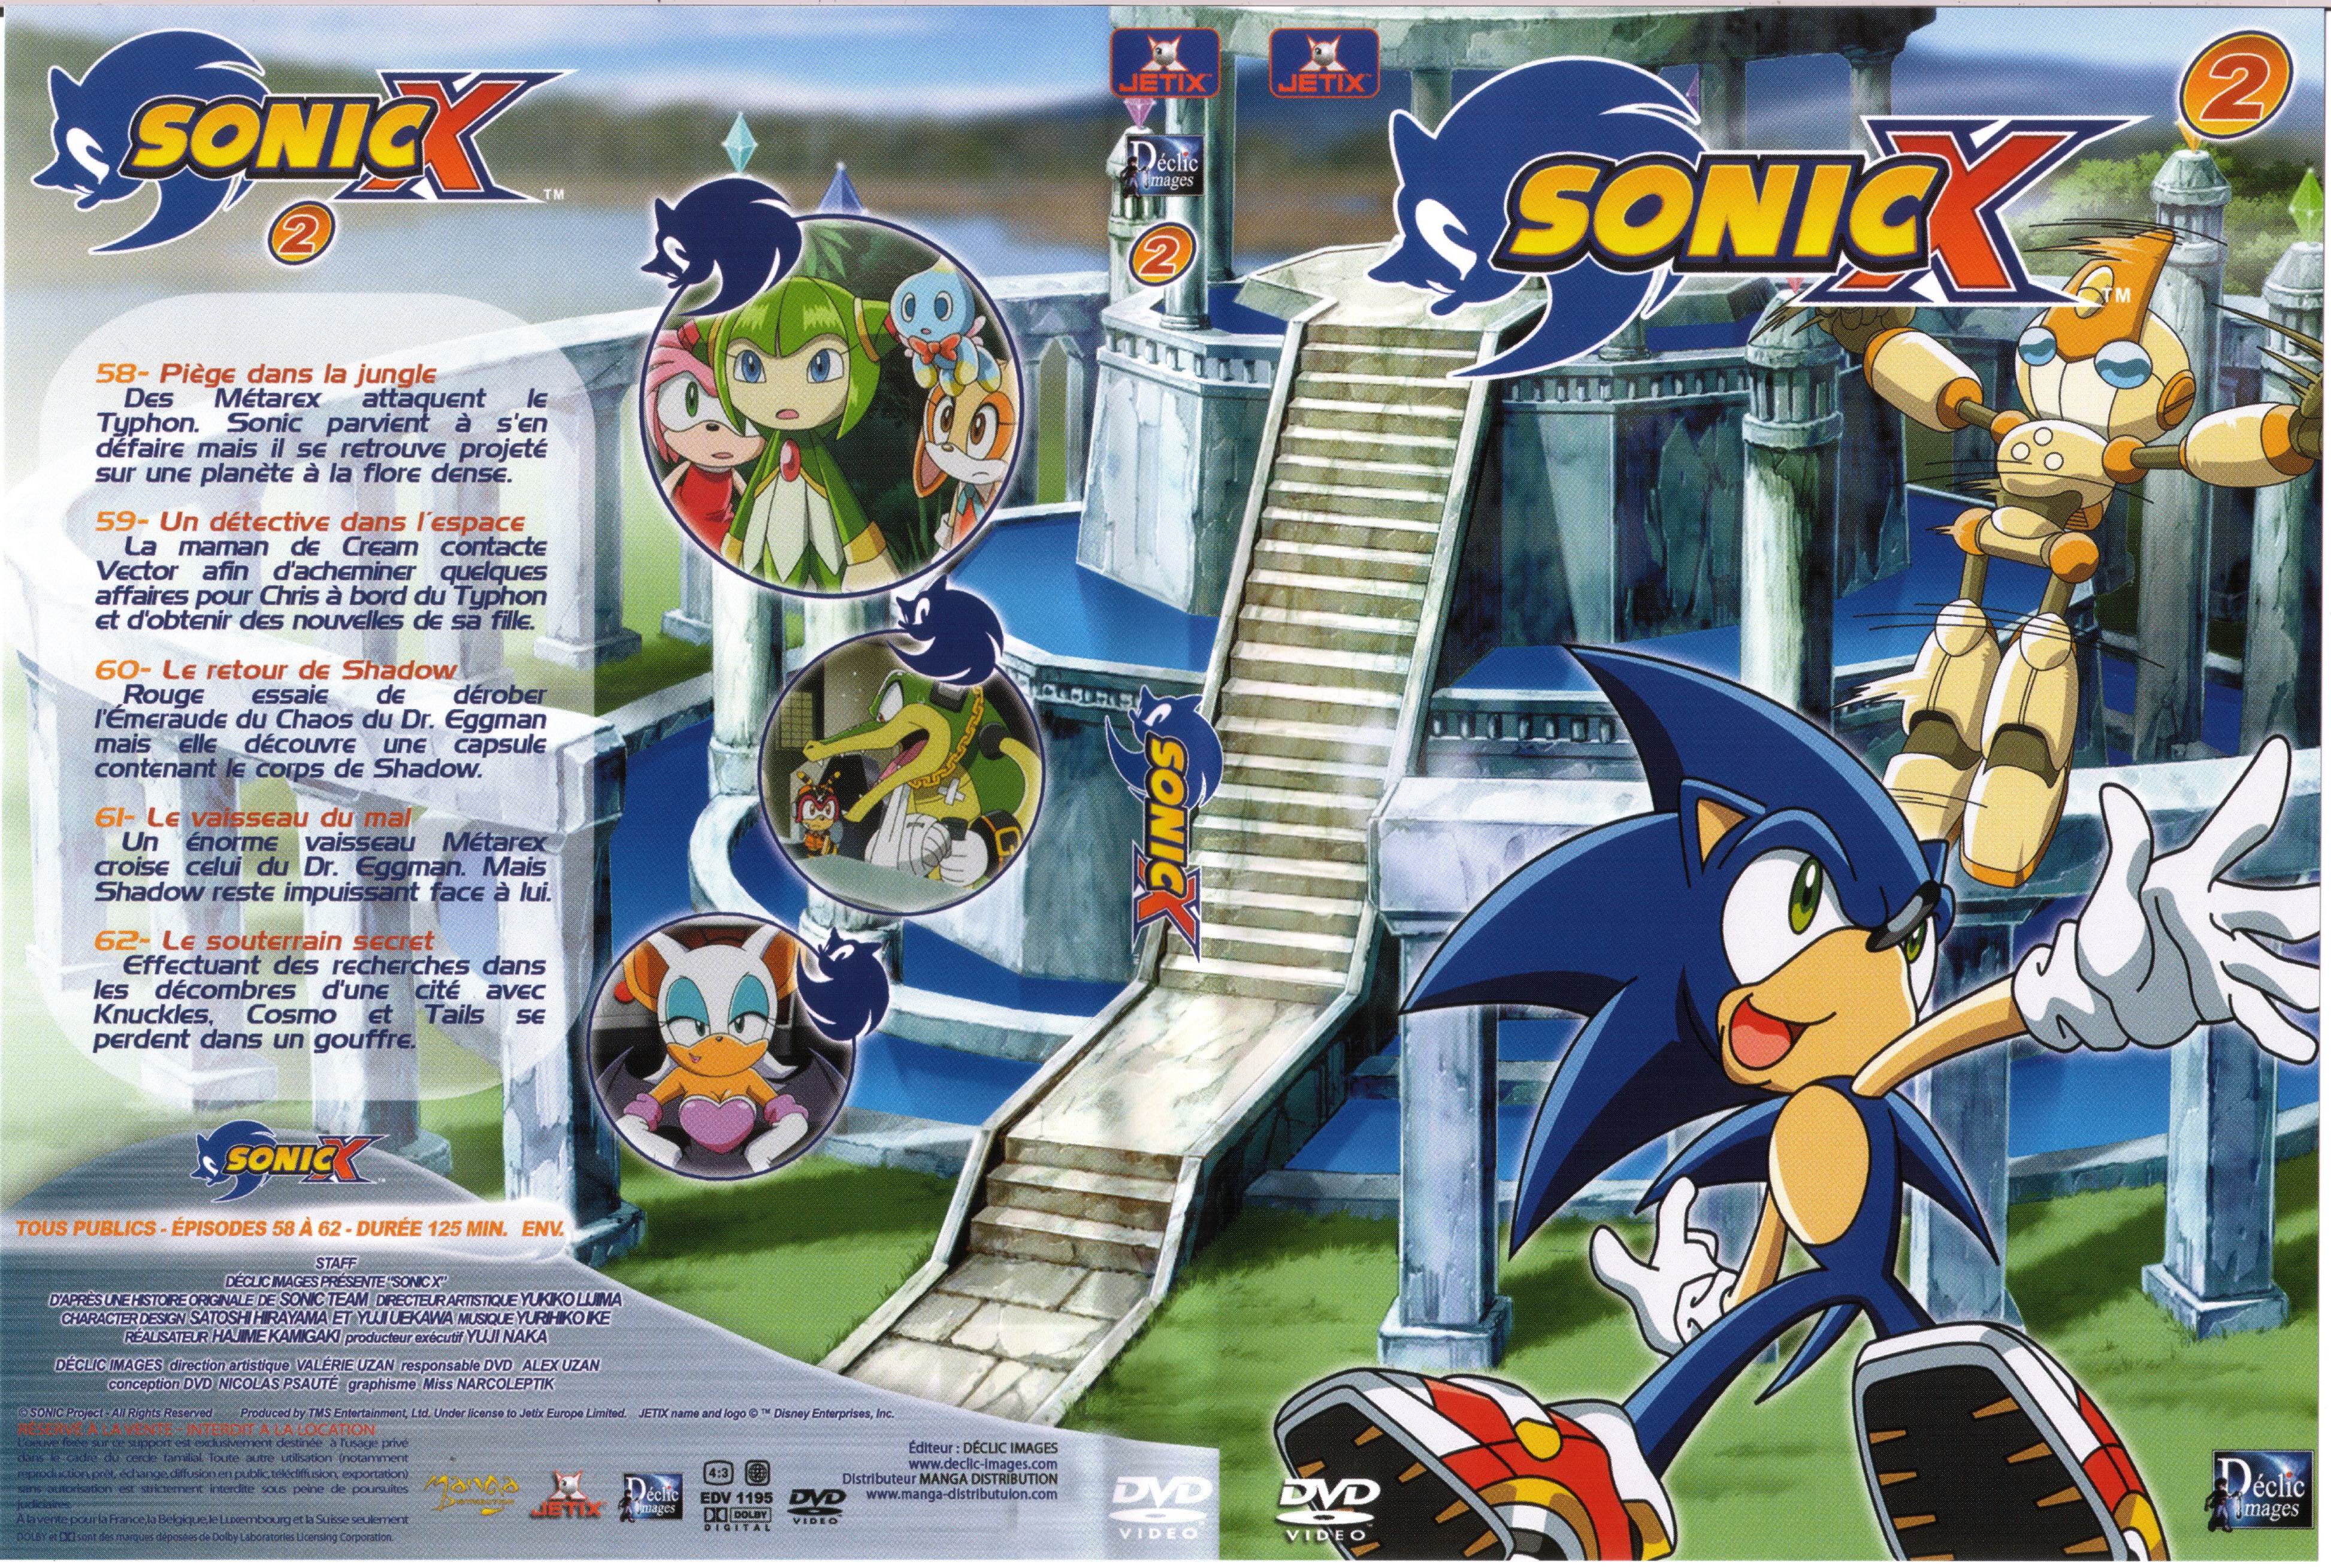 Jaquette DVD Sonic X vol 20